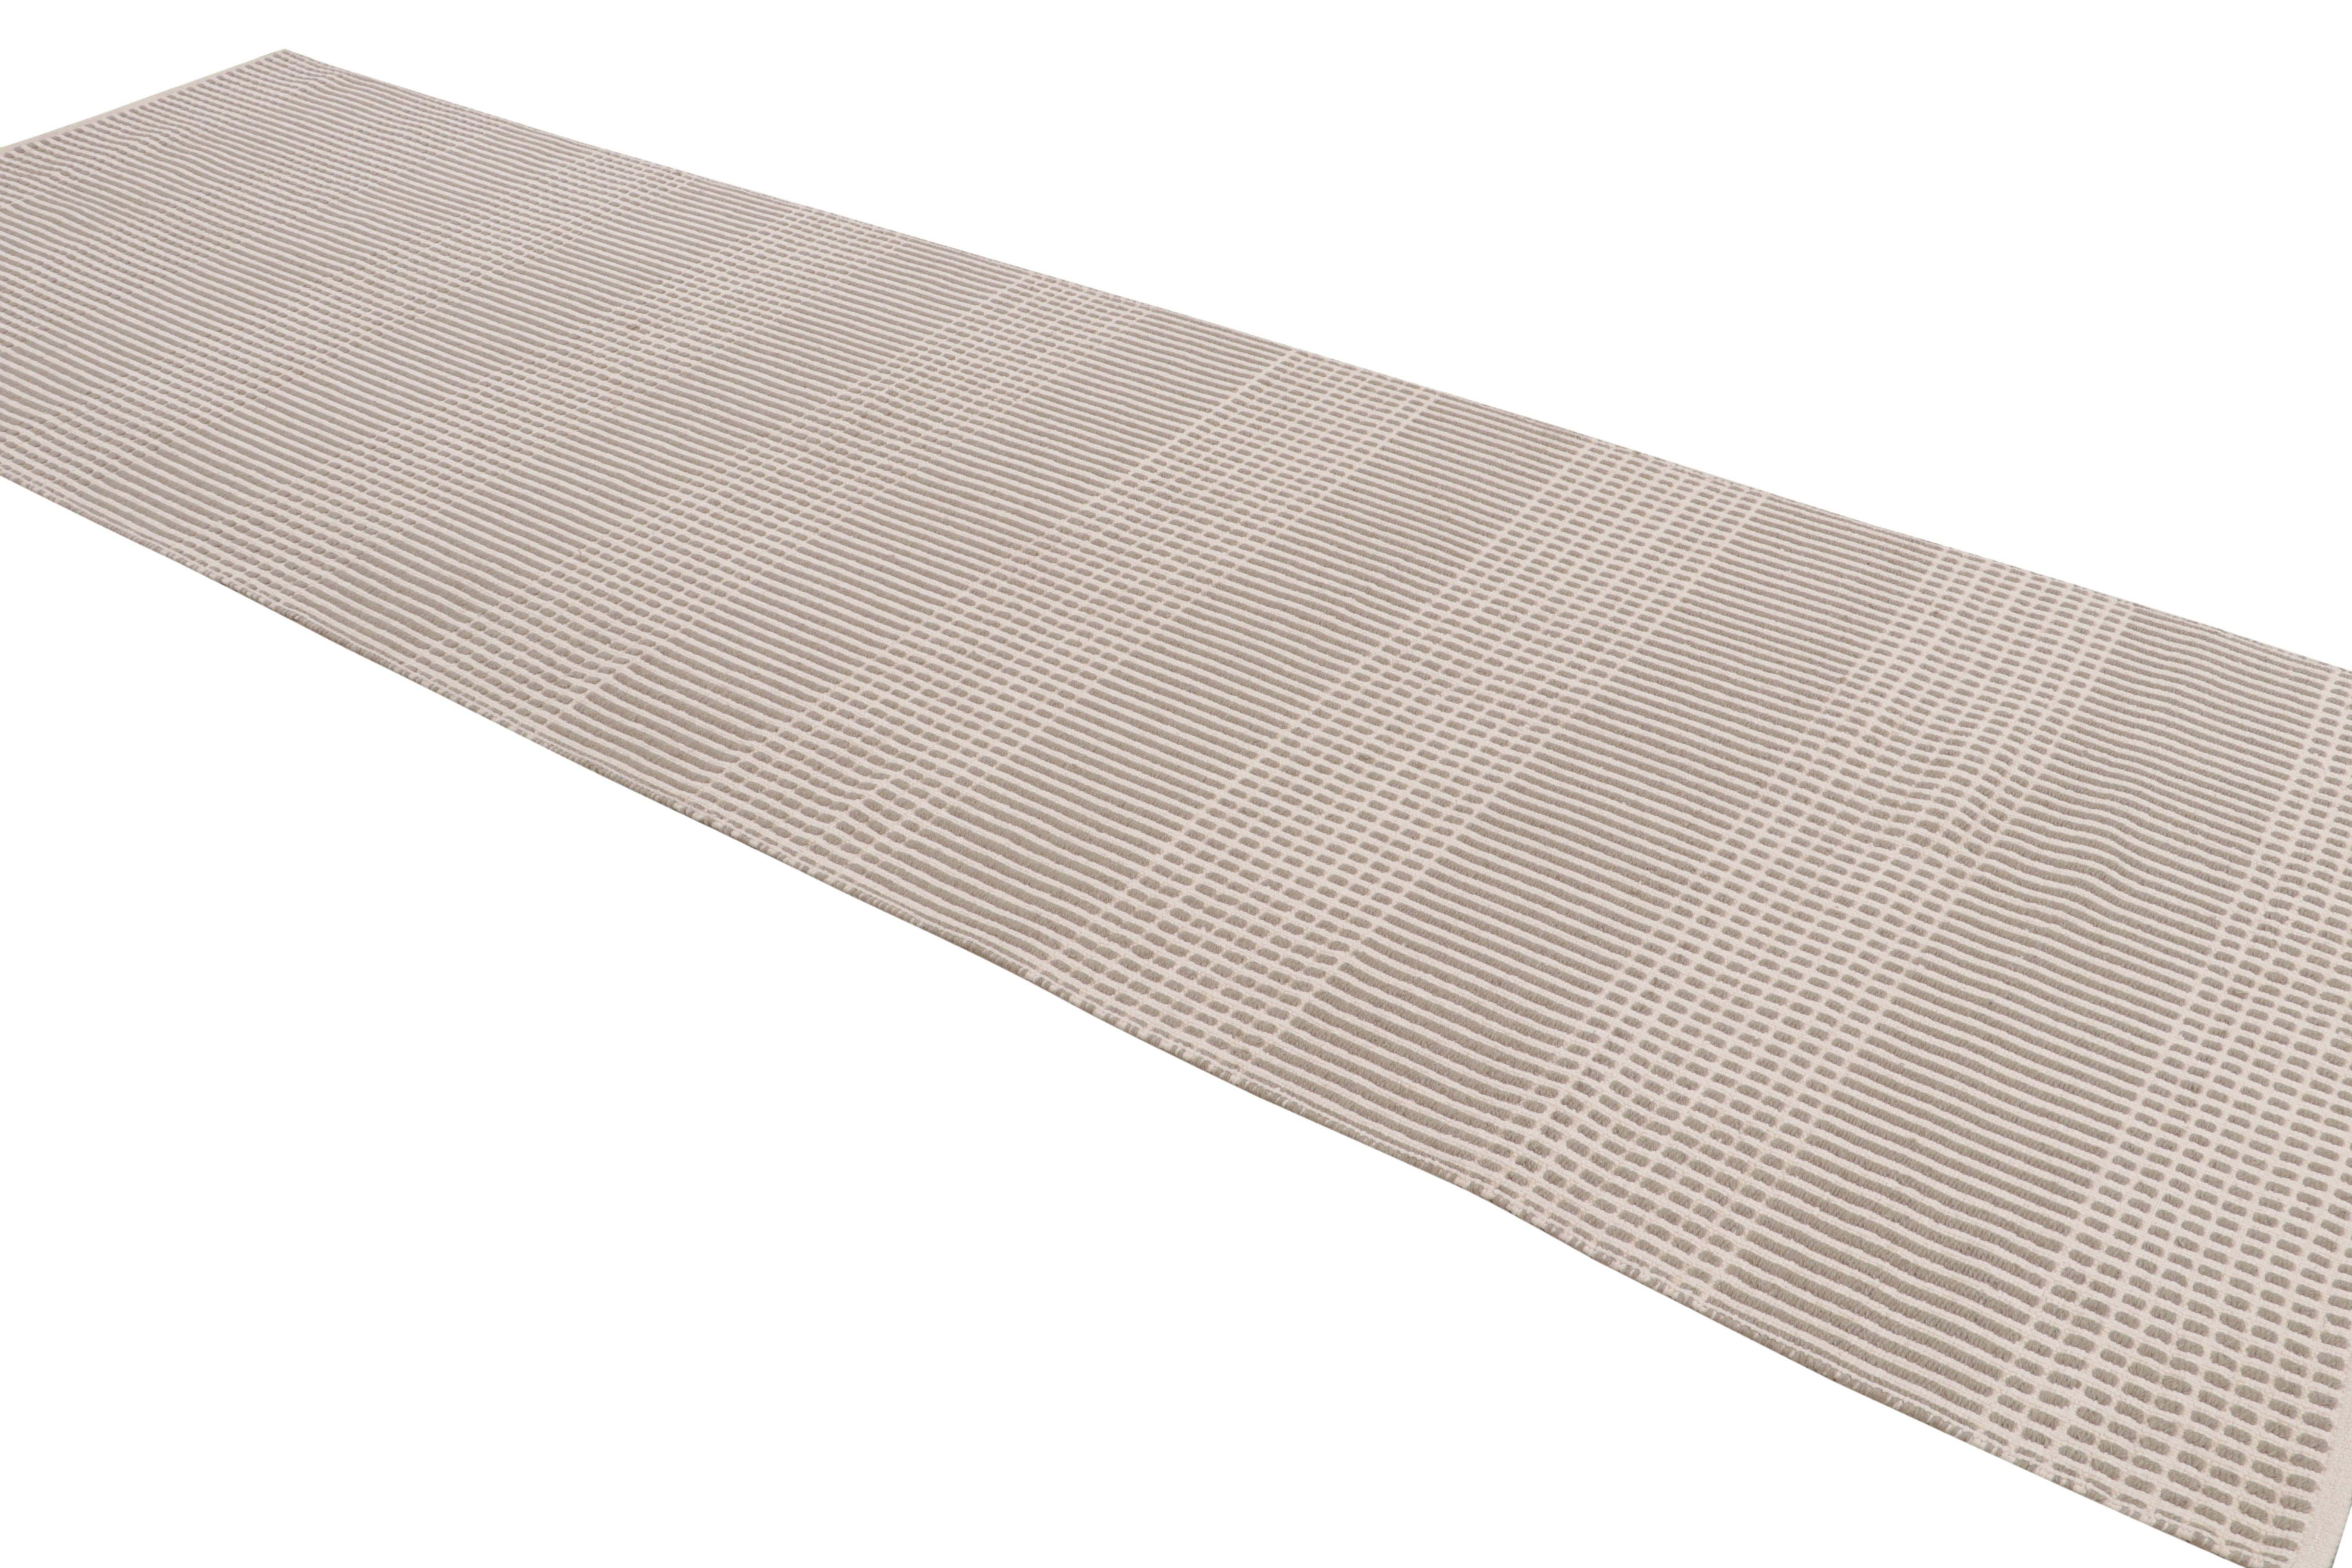 Hand-Woven Rug & Kilim's Modern Flat-Weave Beige Brown Geometric Striped Pattern For Sale